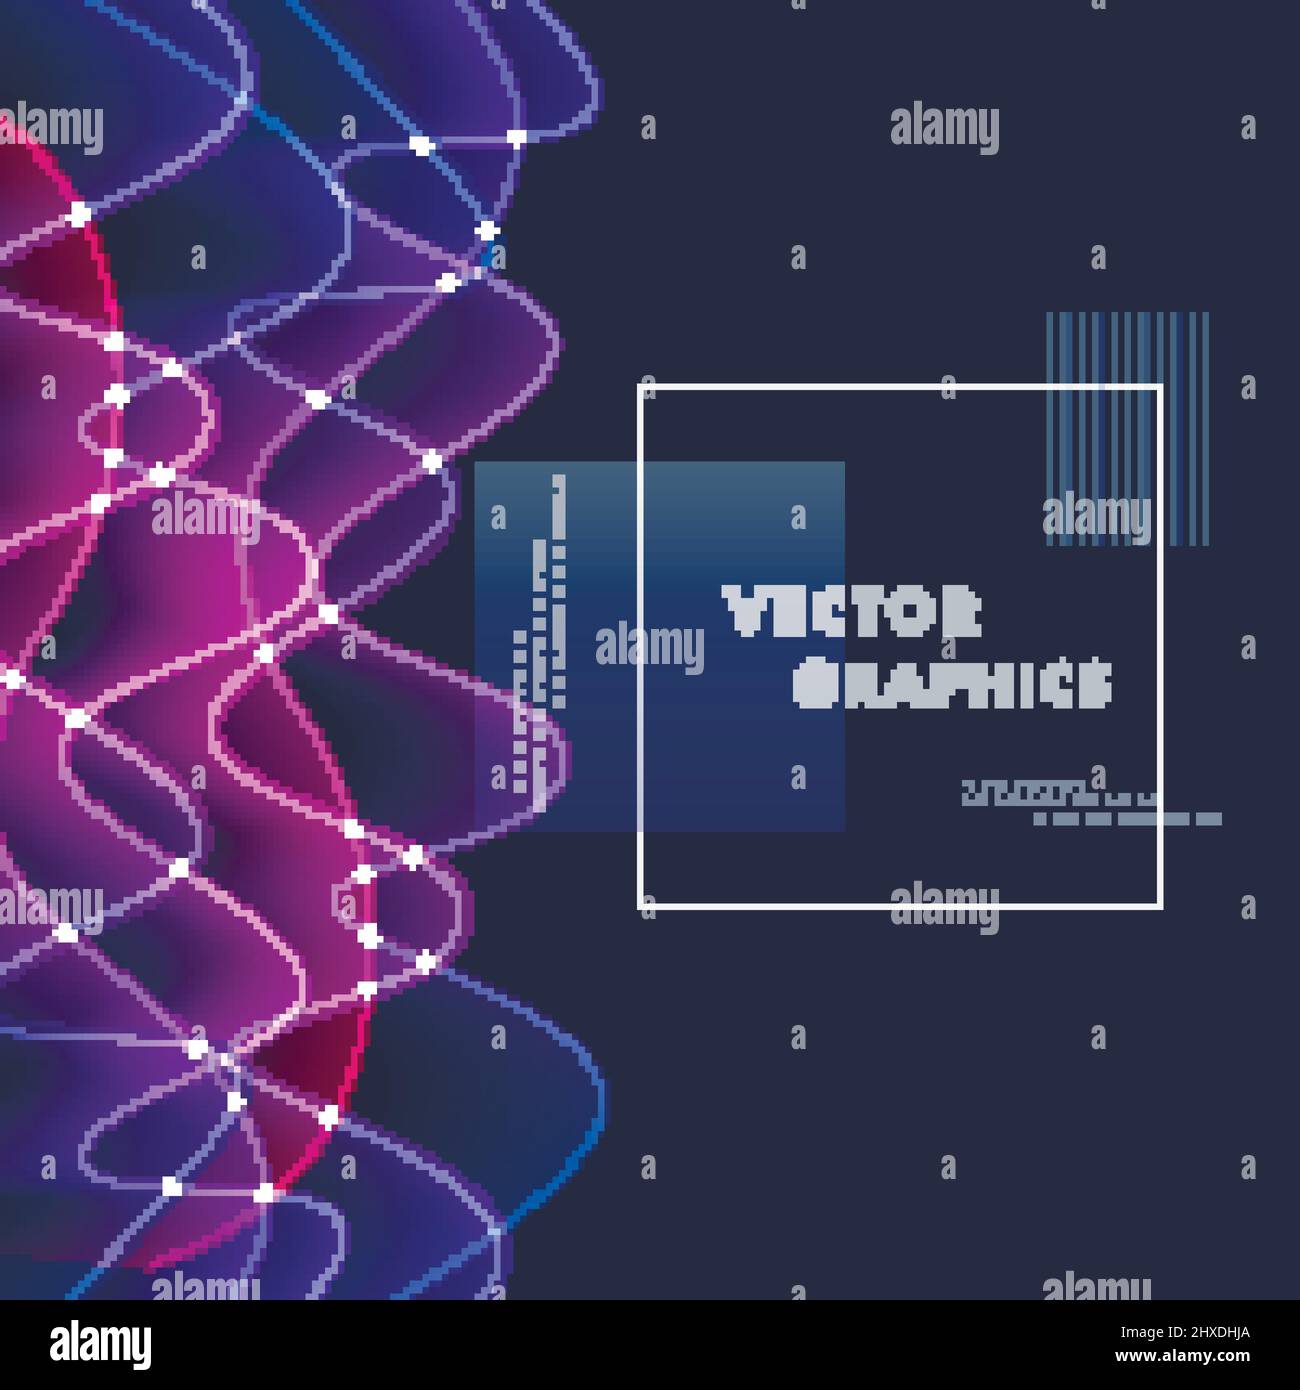 Vektorgrafik mit abstrakten Farbwellen Stock Vektor